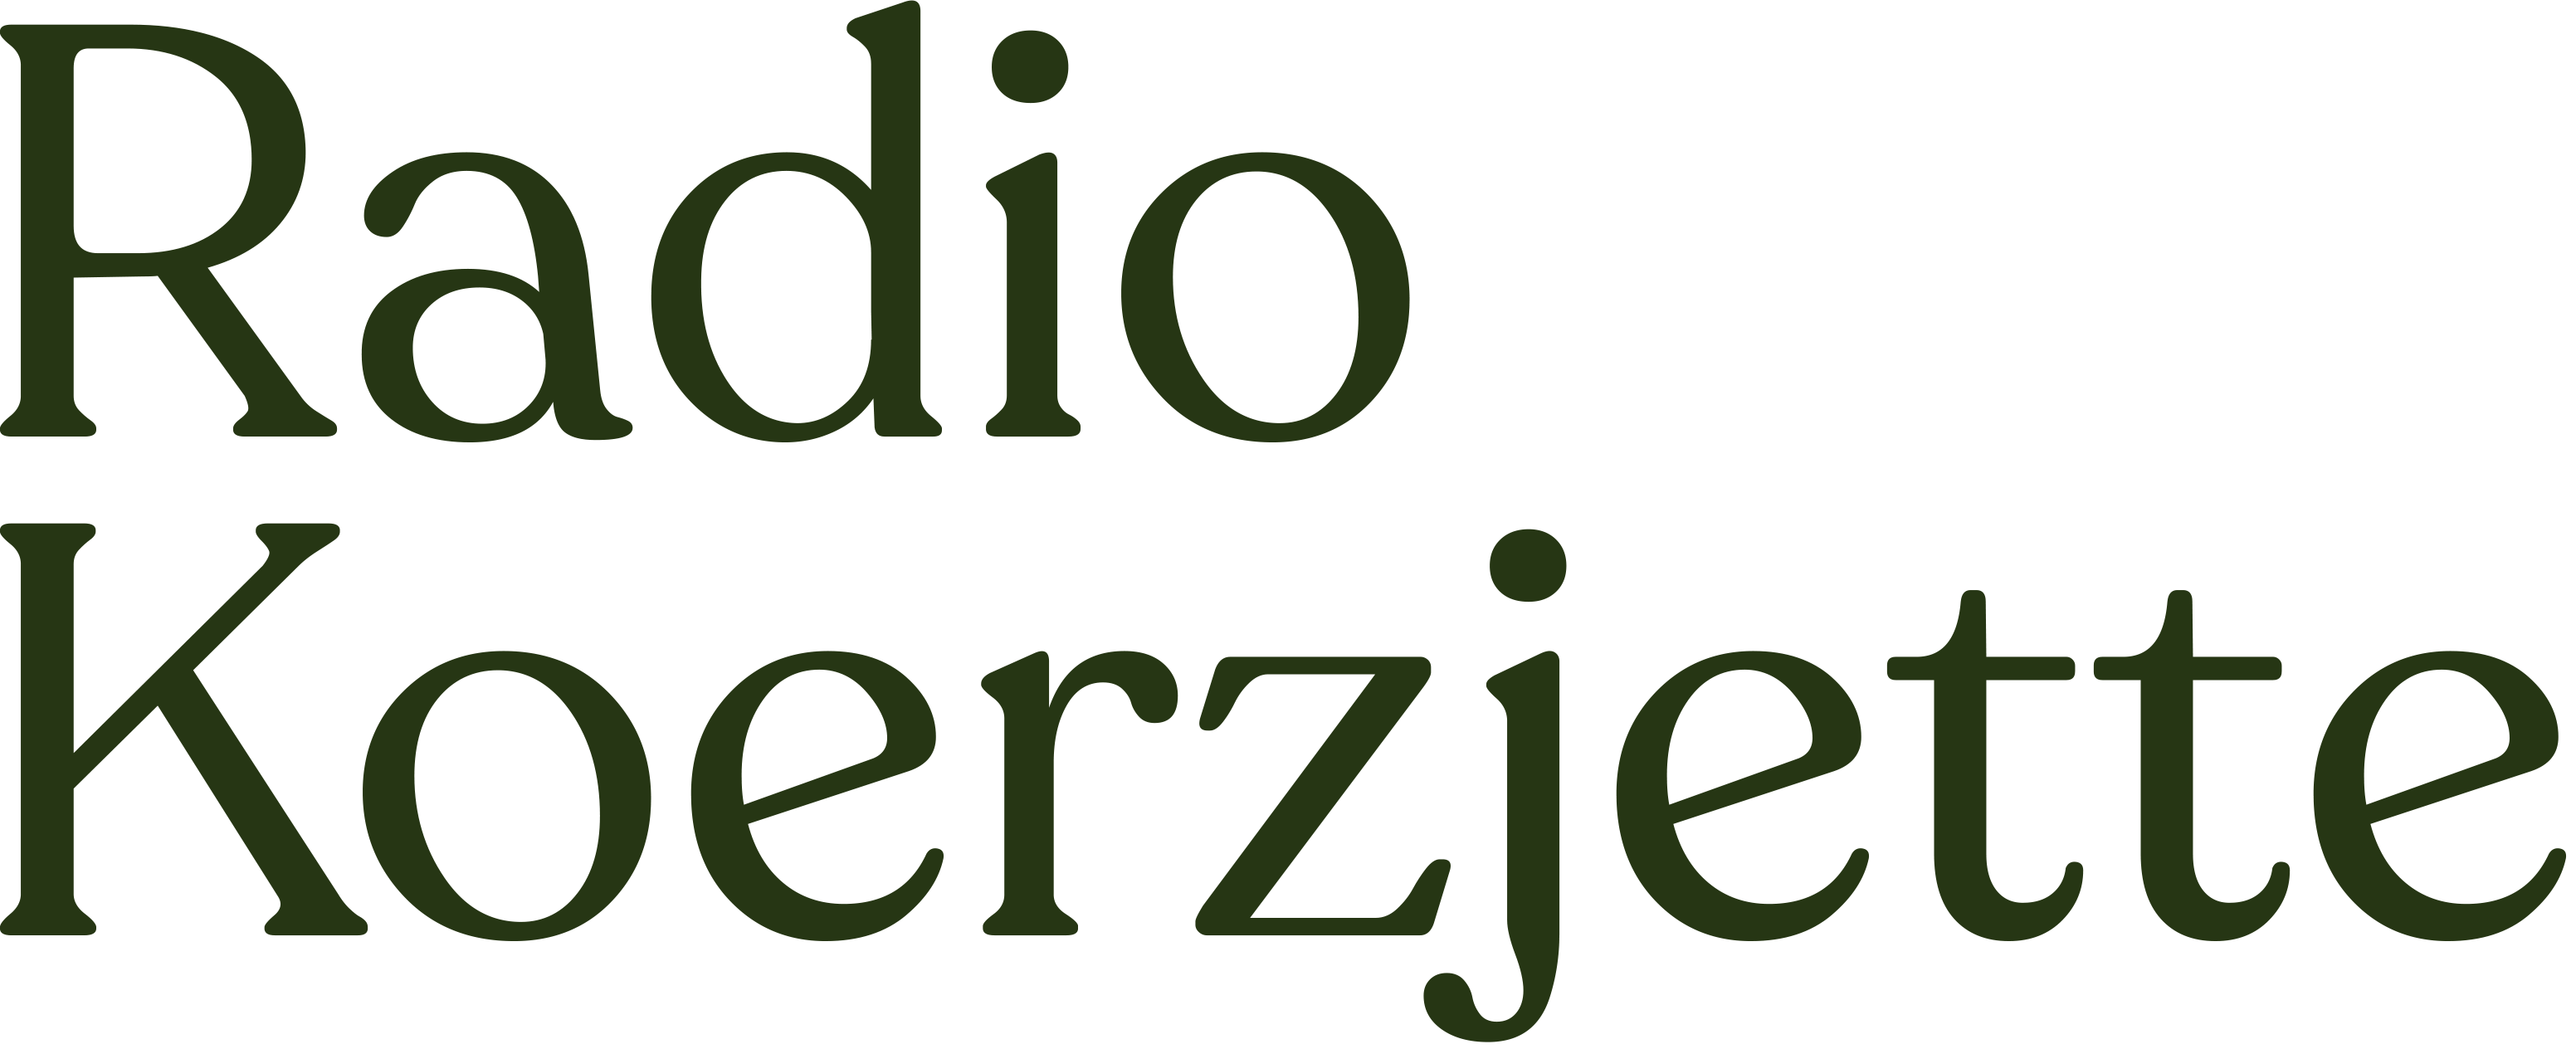 Radio Koerzjette